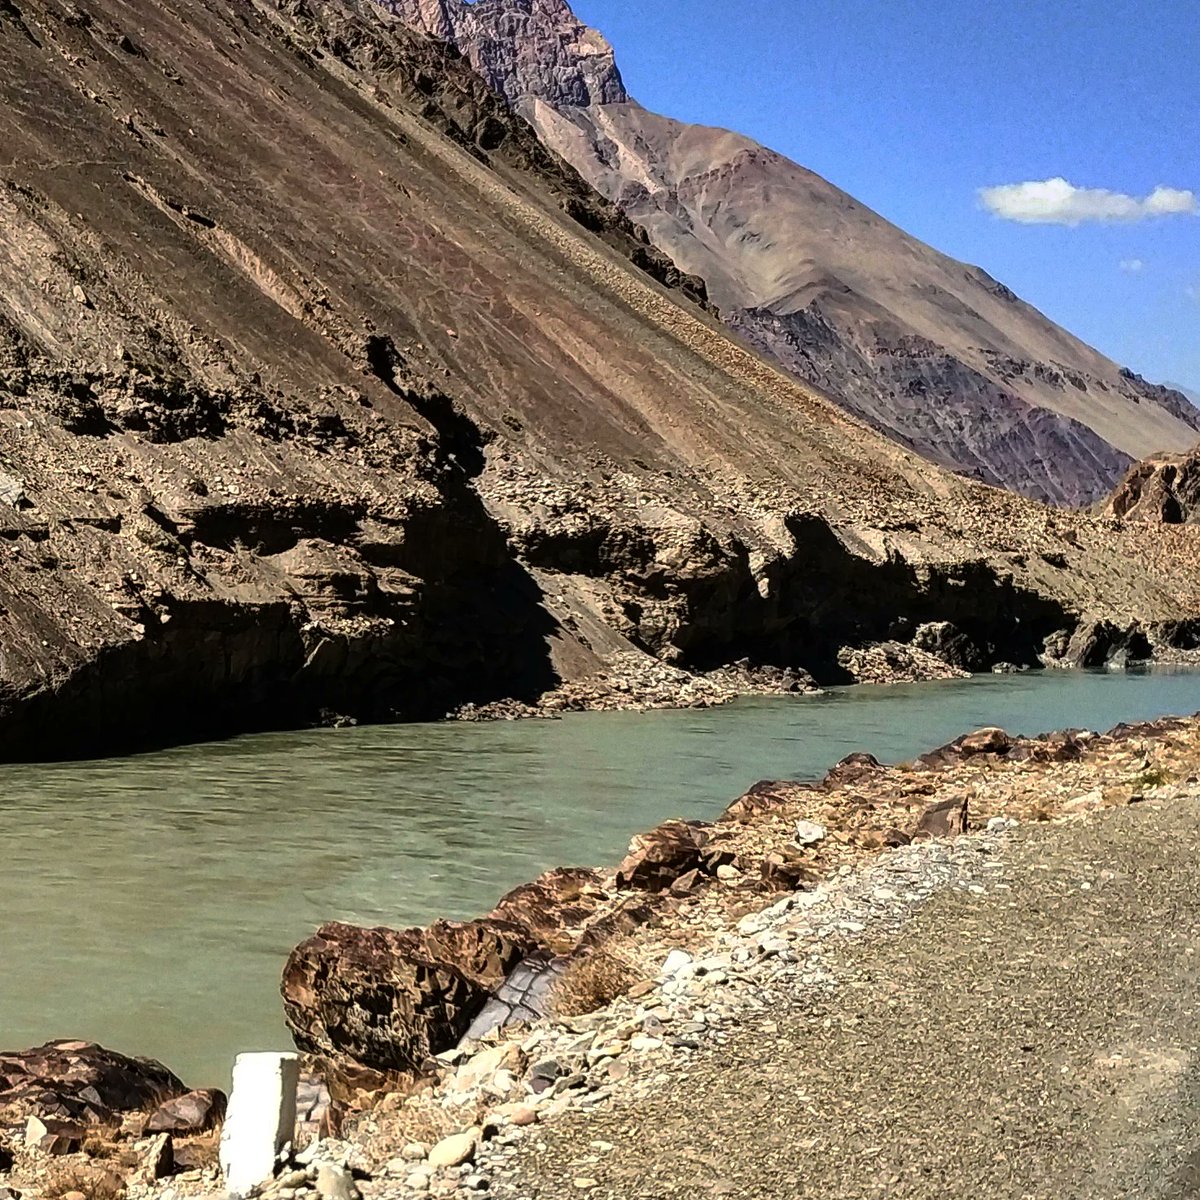 Water never meant life.

#Desert #Water #Mountains #Rivers #Stone #Rock #Beauty #Travel #Life #Leh #Kargil #Ladakh #KashmirTrails #Tourism #WorldTourism #WorldEnvironmentDay #SaveTourism #MiPhotograpy #MiMix #Xiaomi